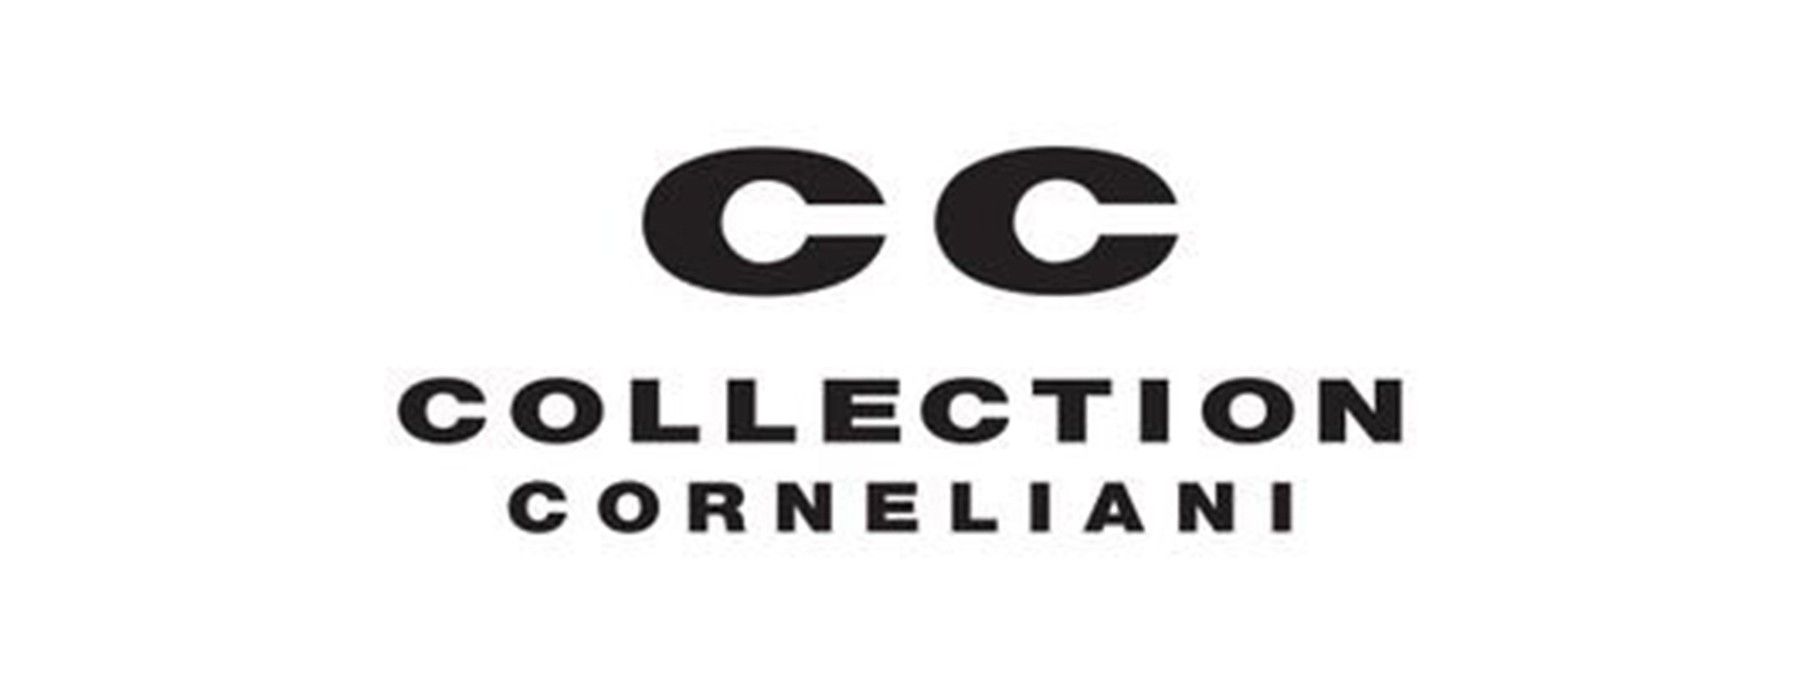 CC COLLECTION - CORNELIANI